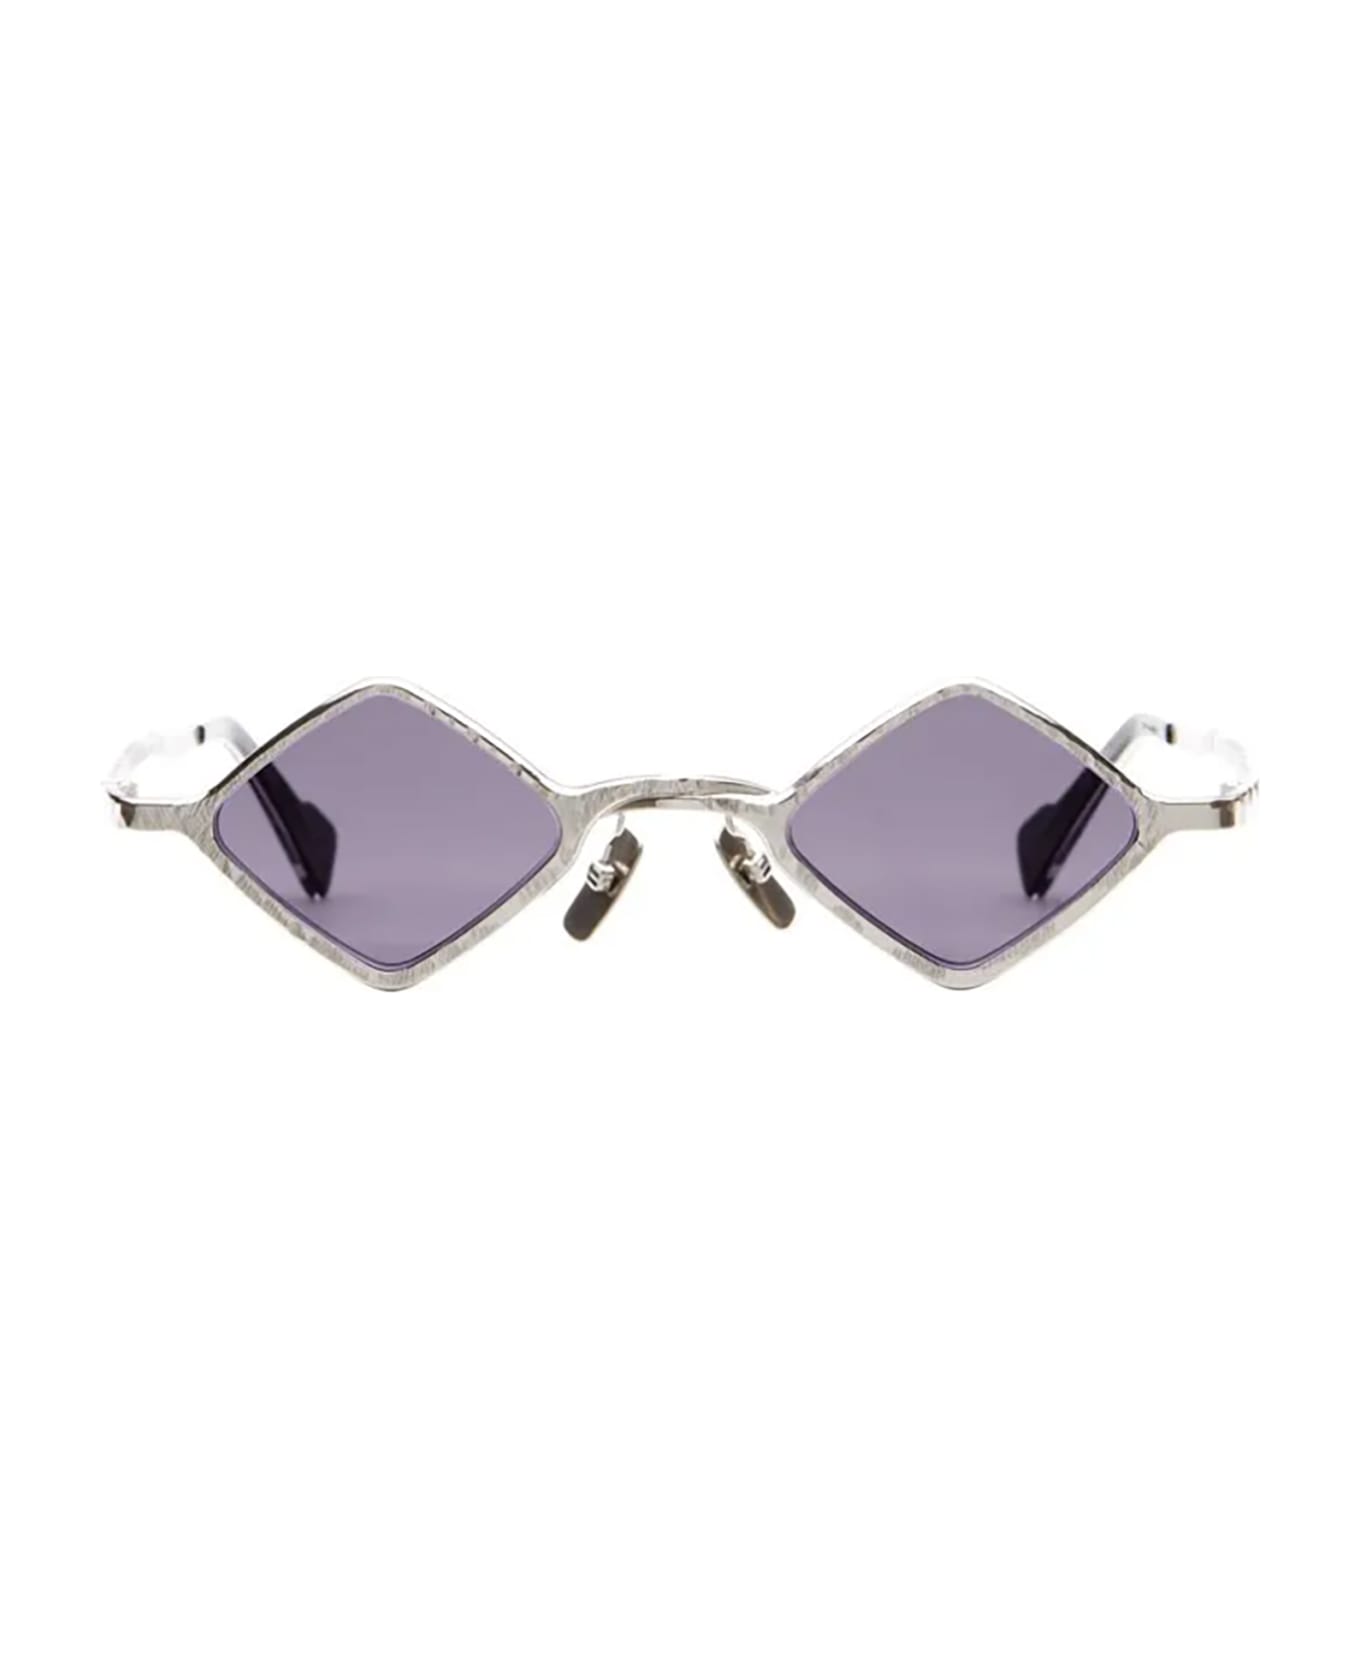 Kuboraum Z14 Sunglasses - Siv Violet